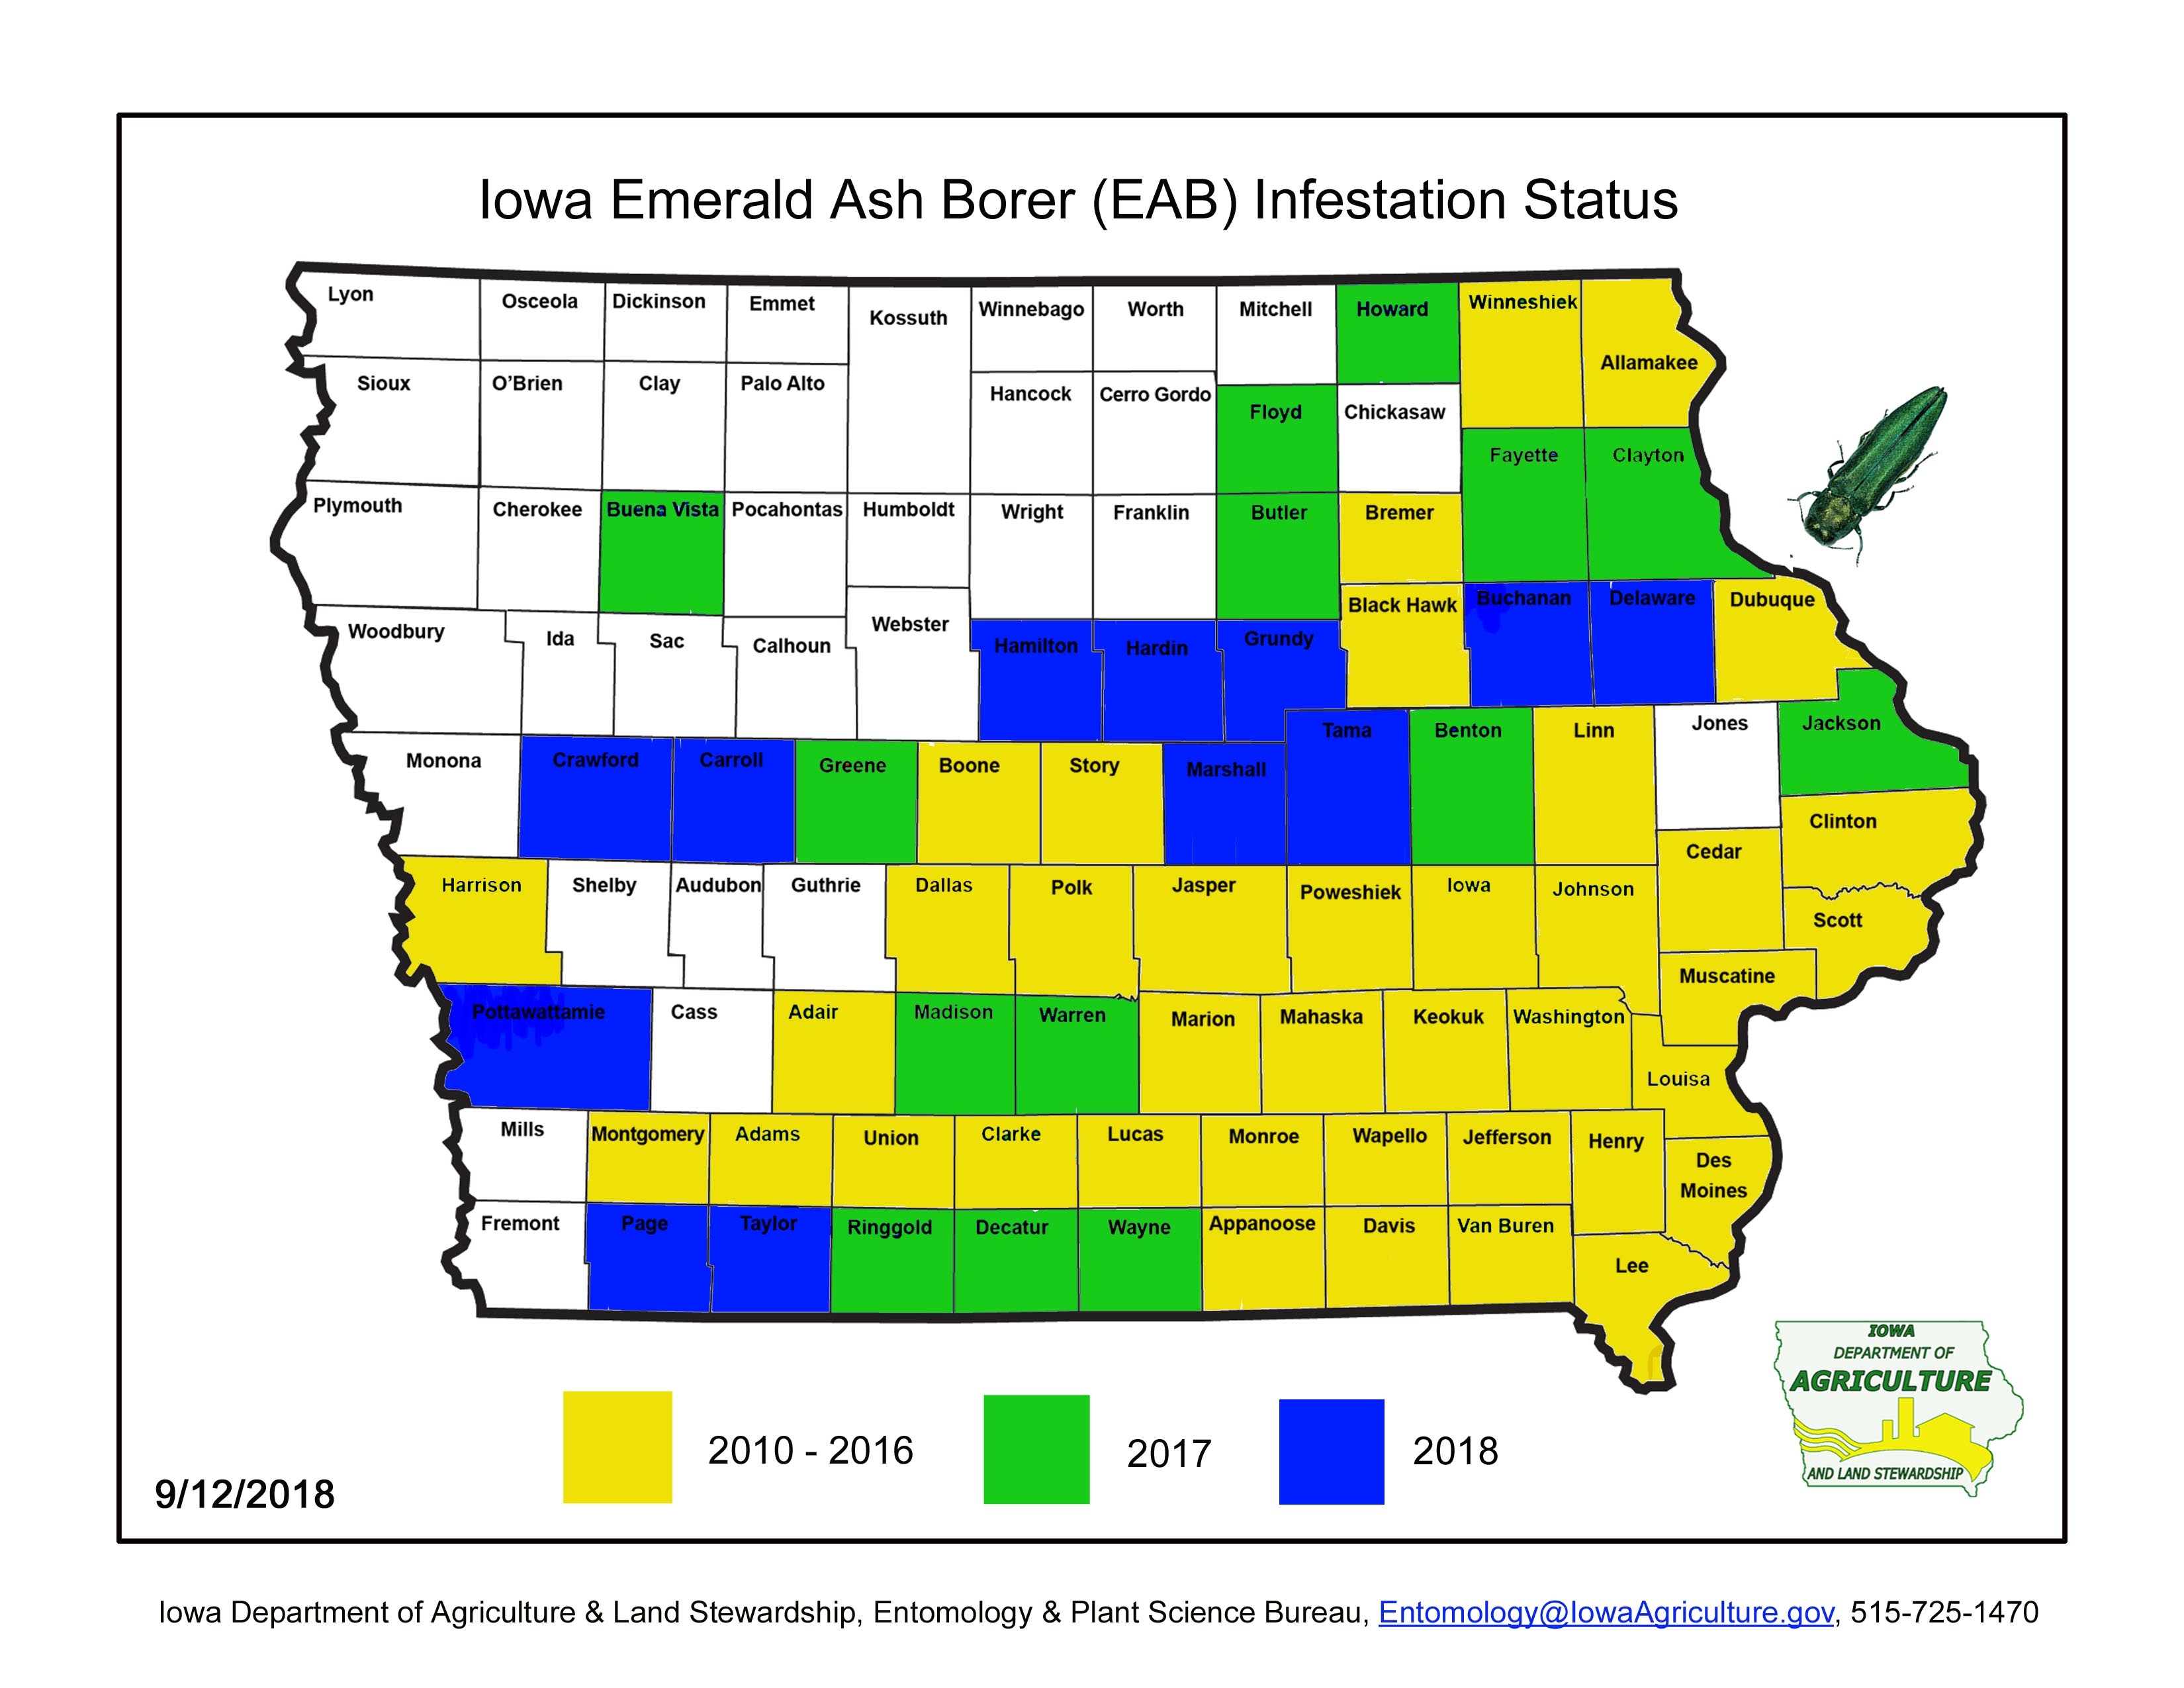 Emerald Ash Borer Infestation Status in Iowa